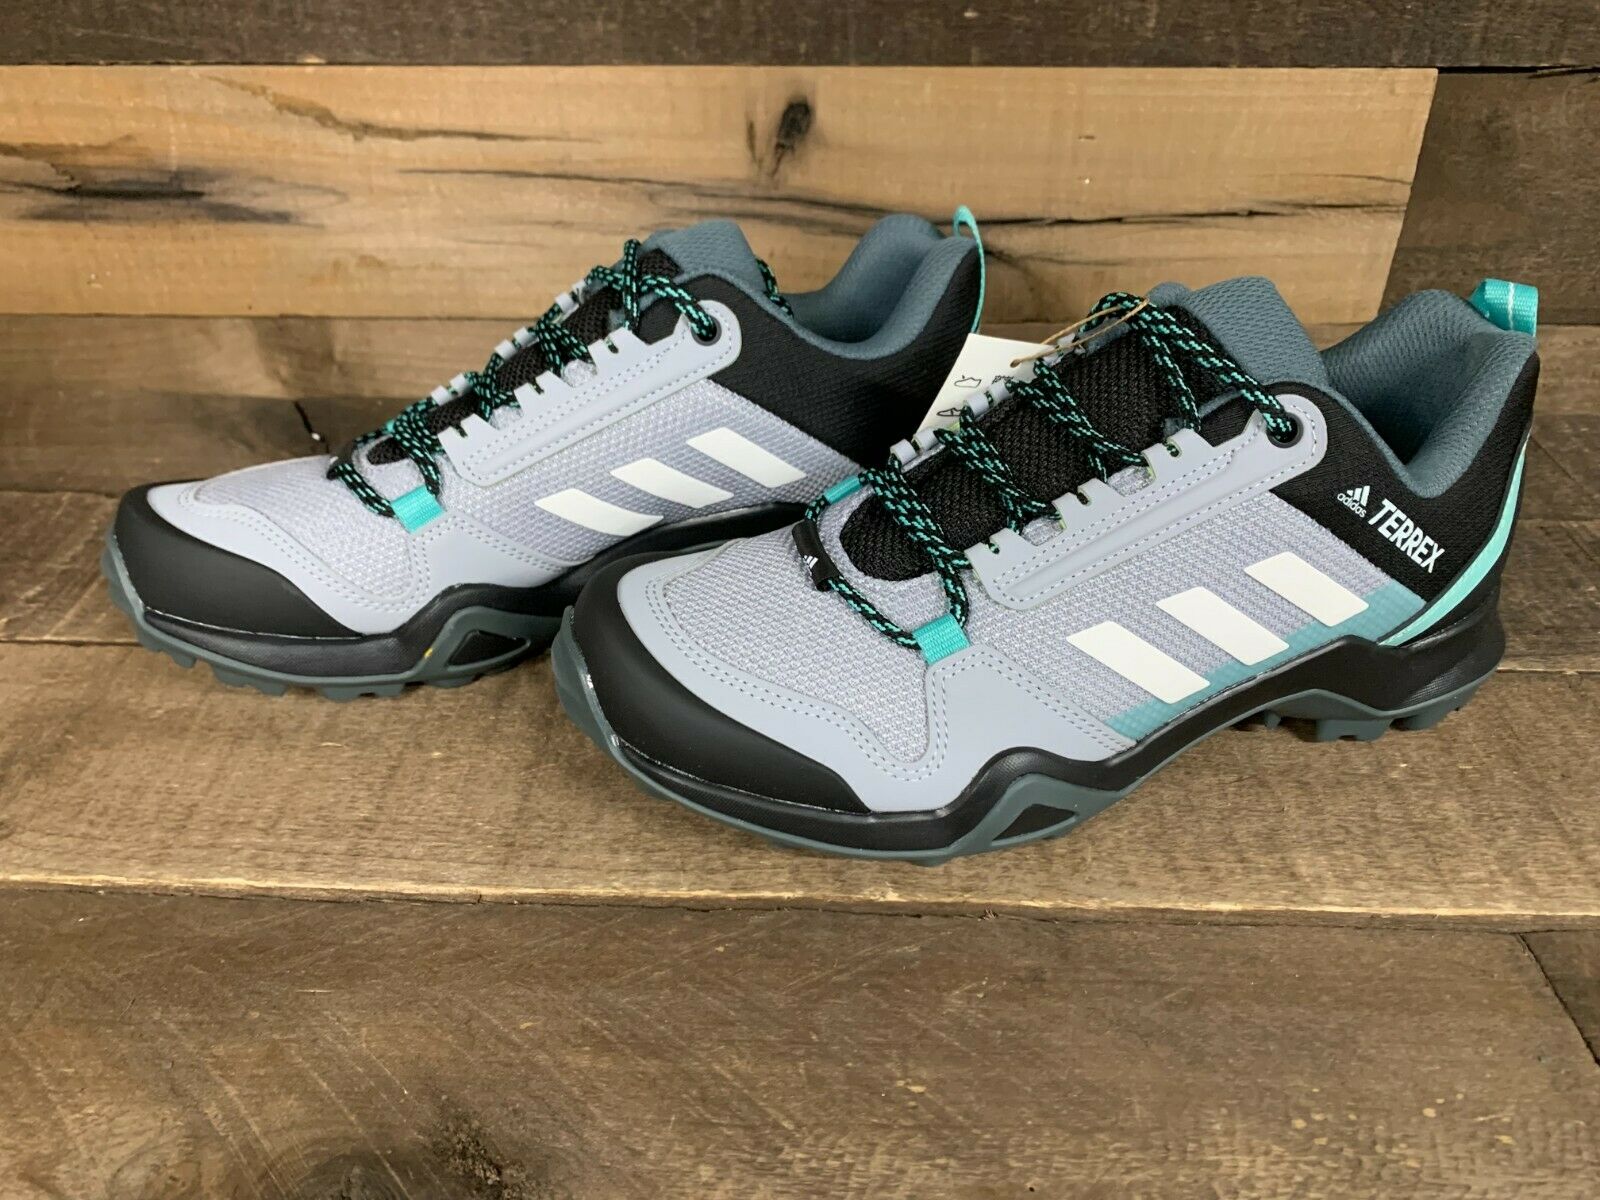 ✳️ Adidas Women's Terrex AX3 W Hiking Shoes Grey/Teal US Size 8 NEW ✳️